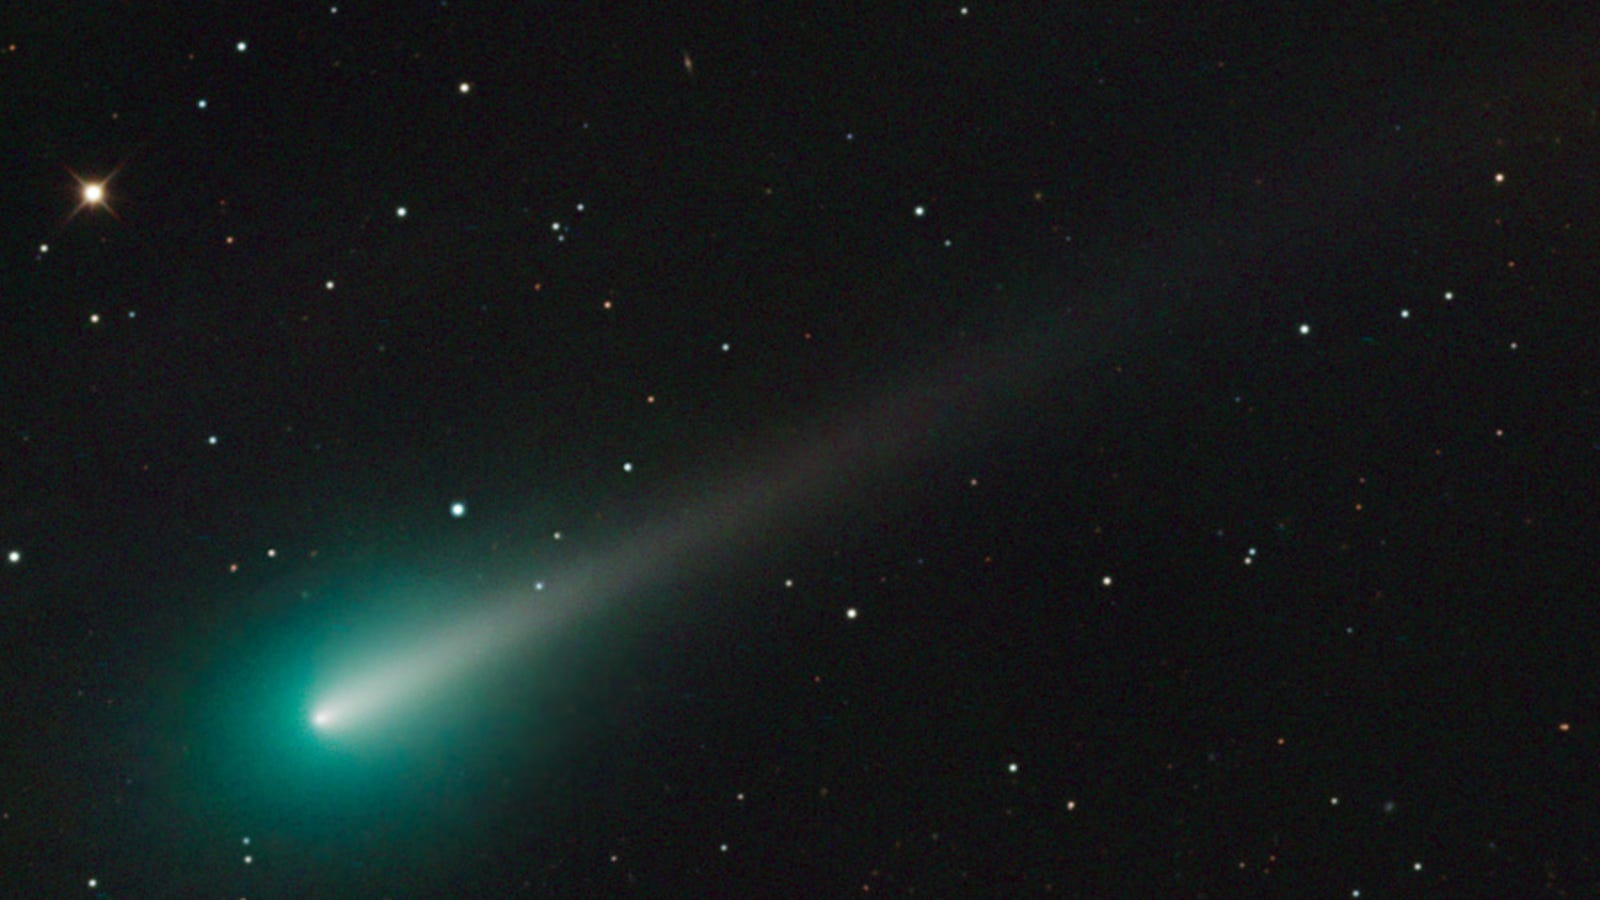 Comet ISON blazes green in new photographs